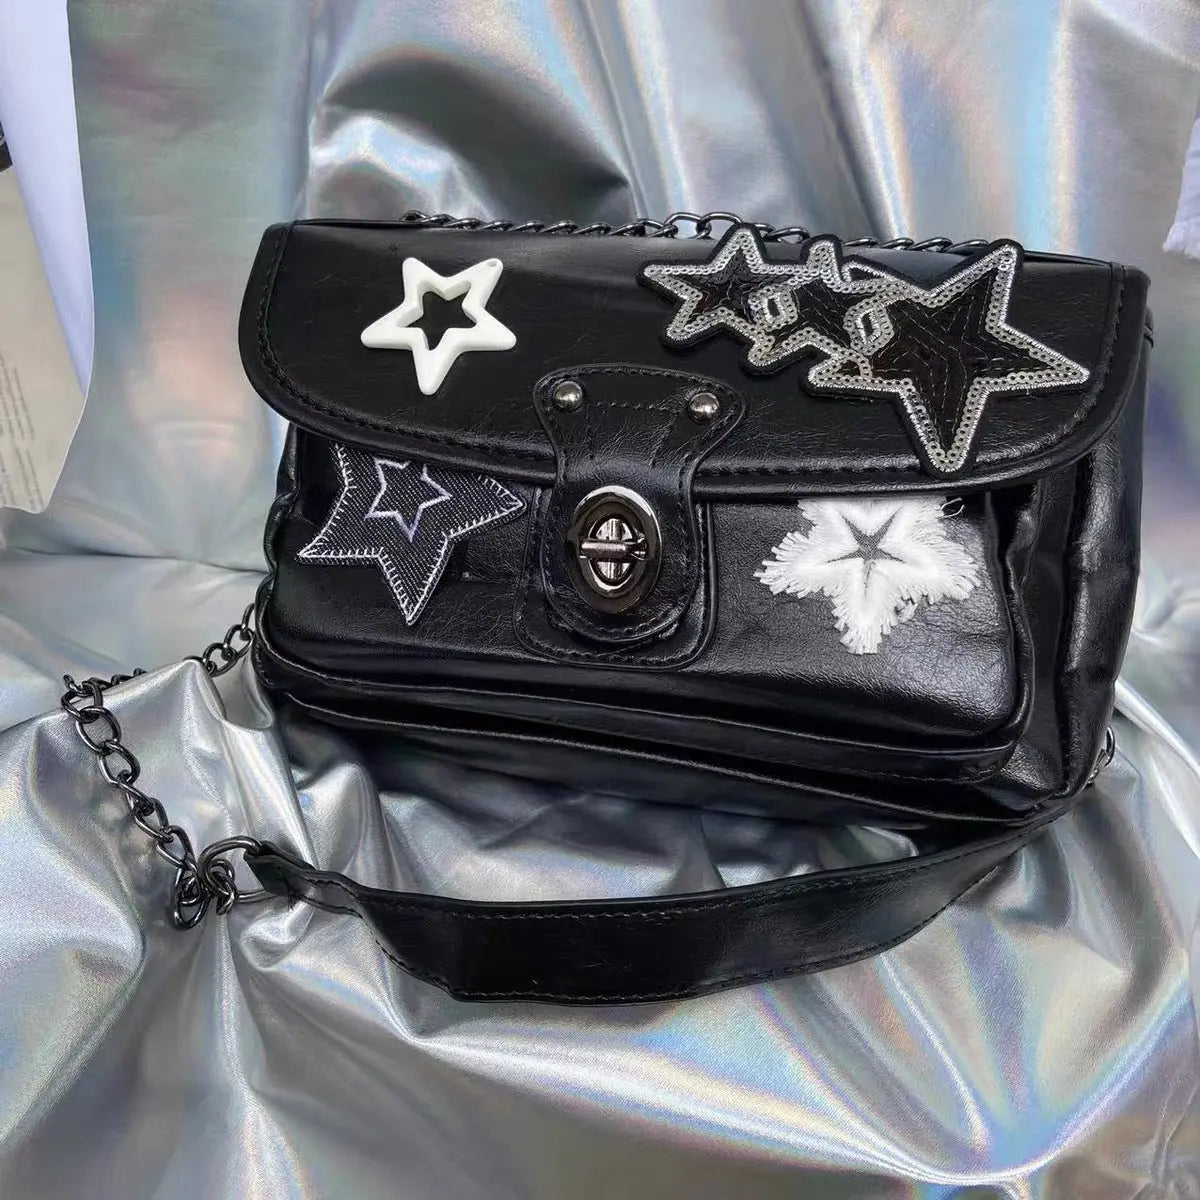 AlielNosirrah- 'Blink' Star Pattern Vintage Crossbody Bags